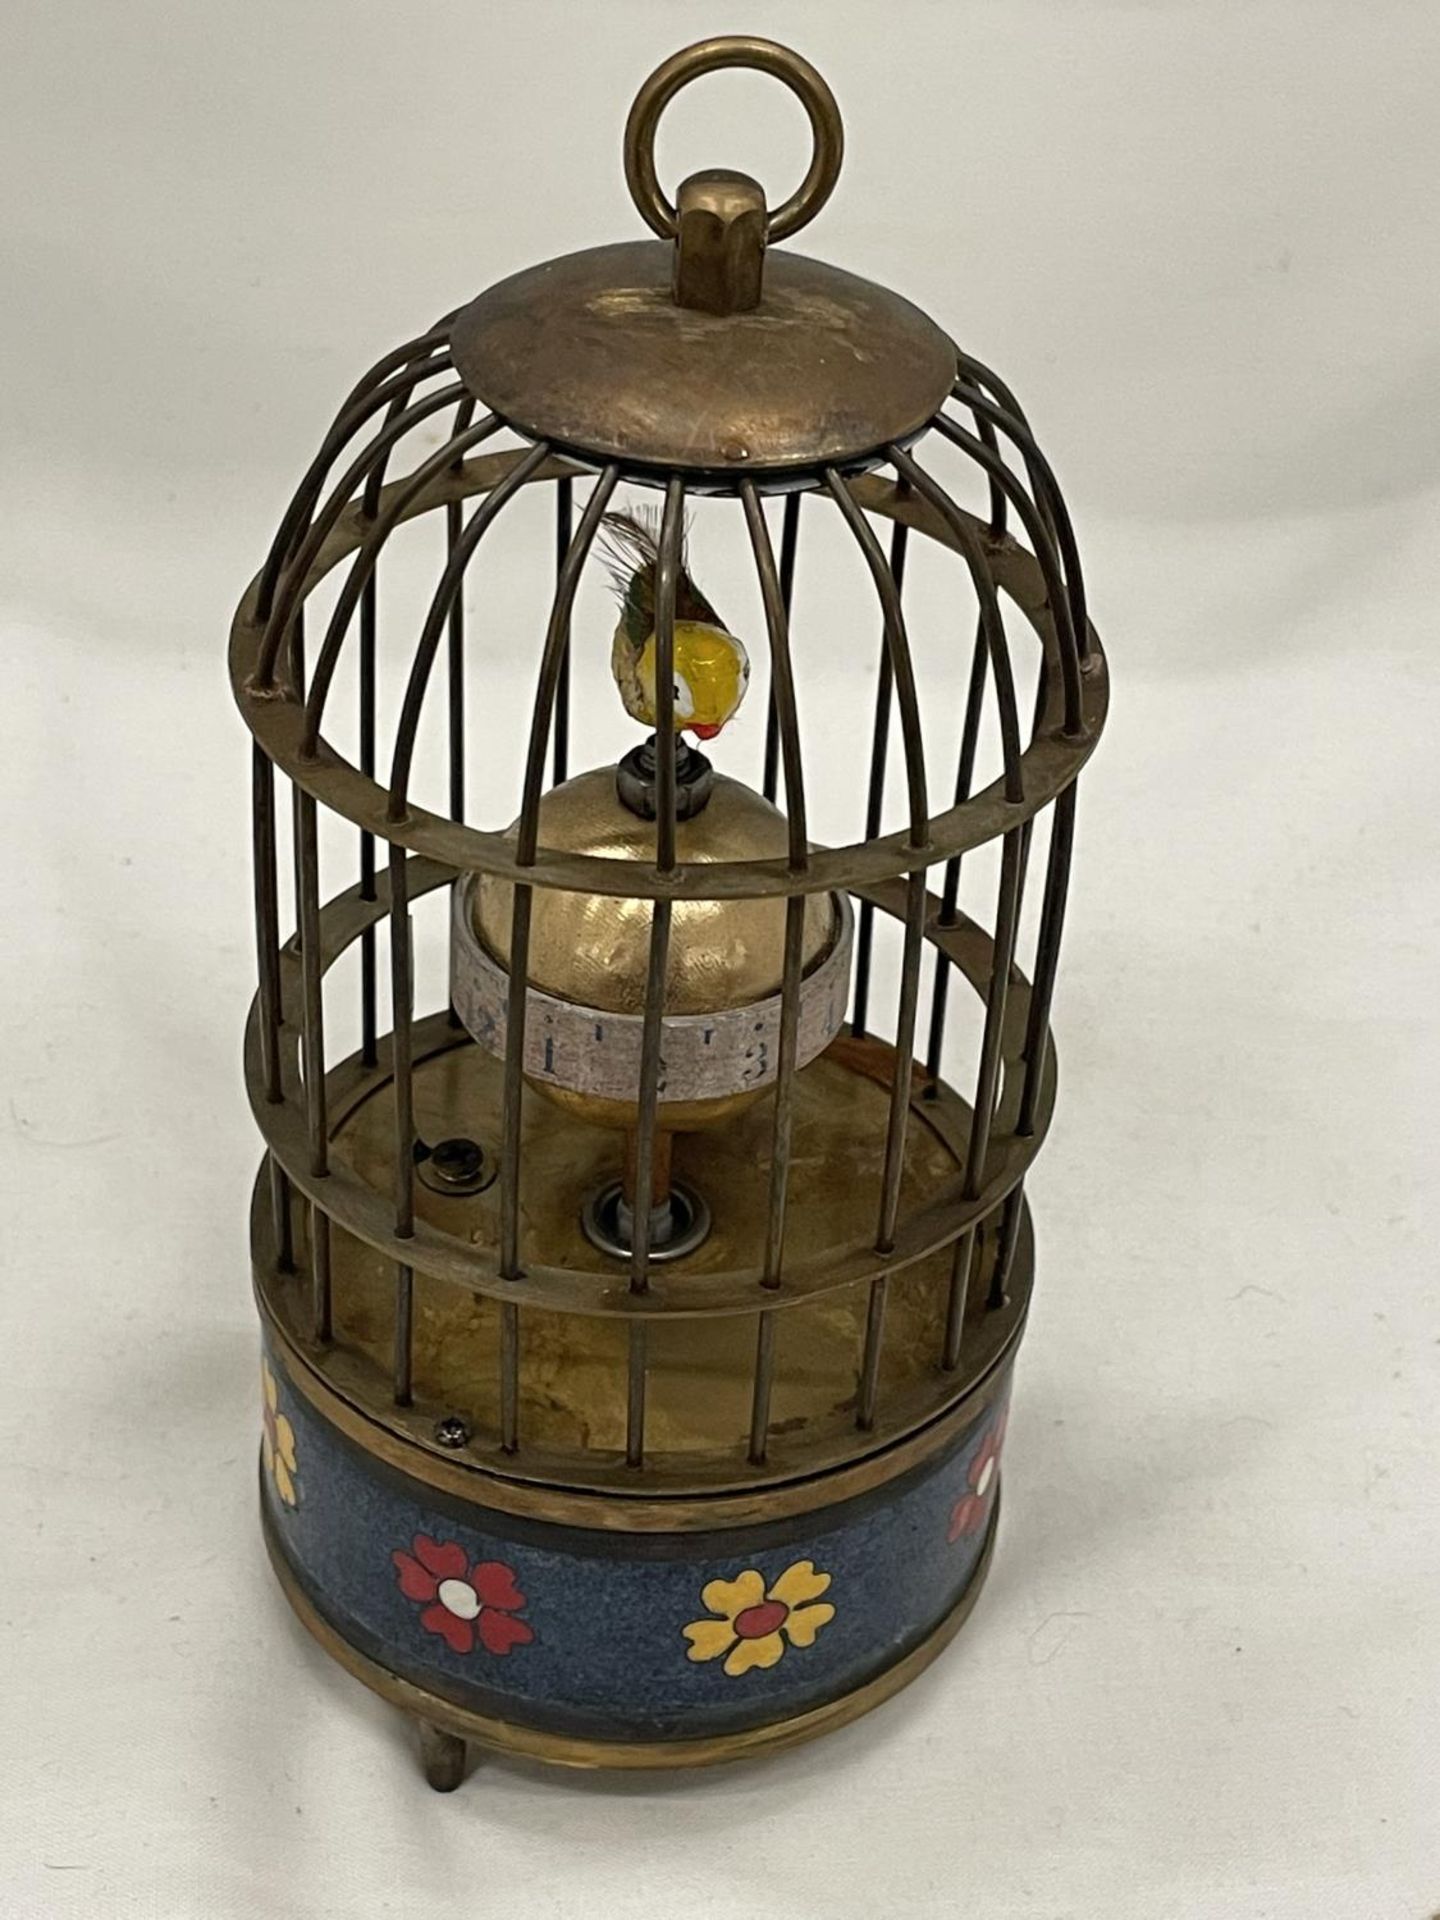 A BRASS BIRD CAGE CLOCK - Image 3 of 4